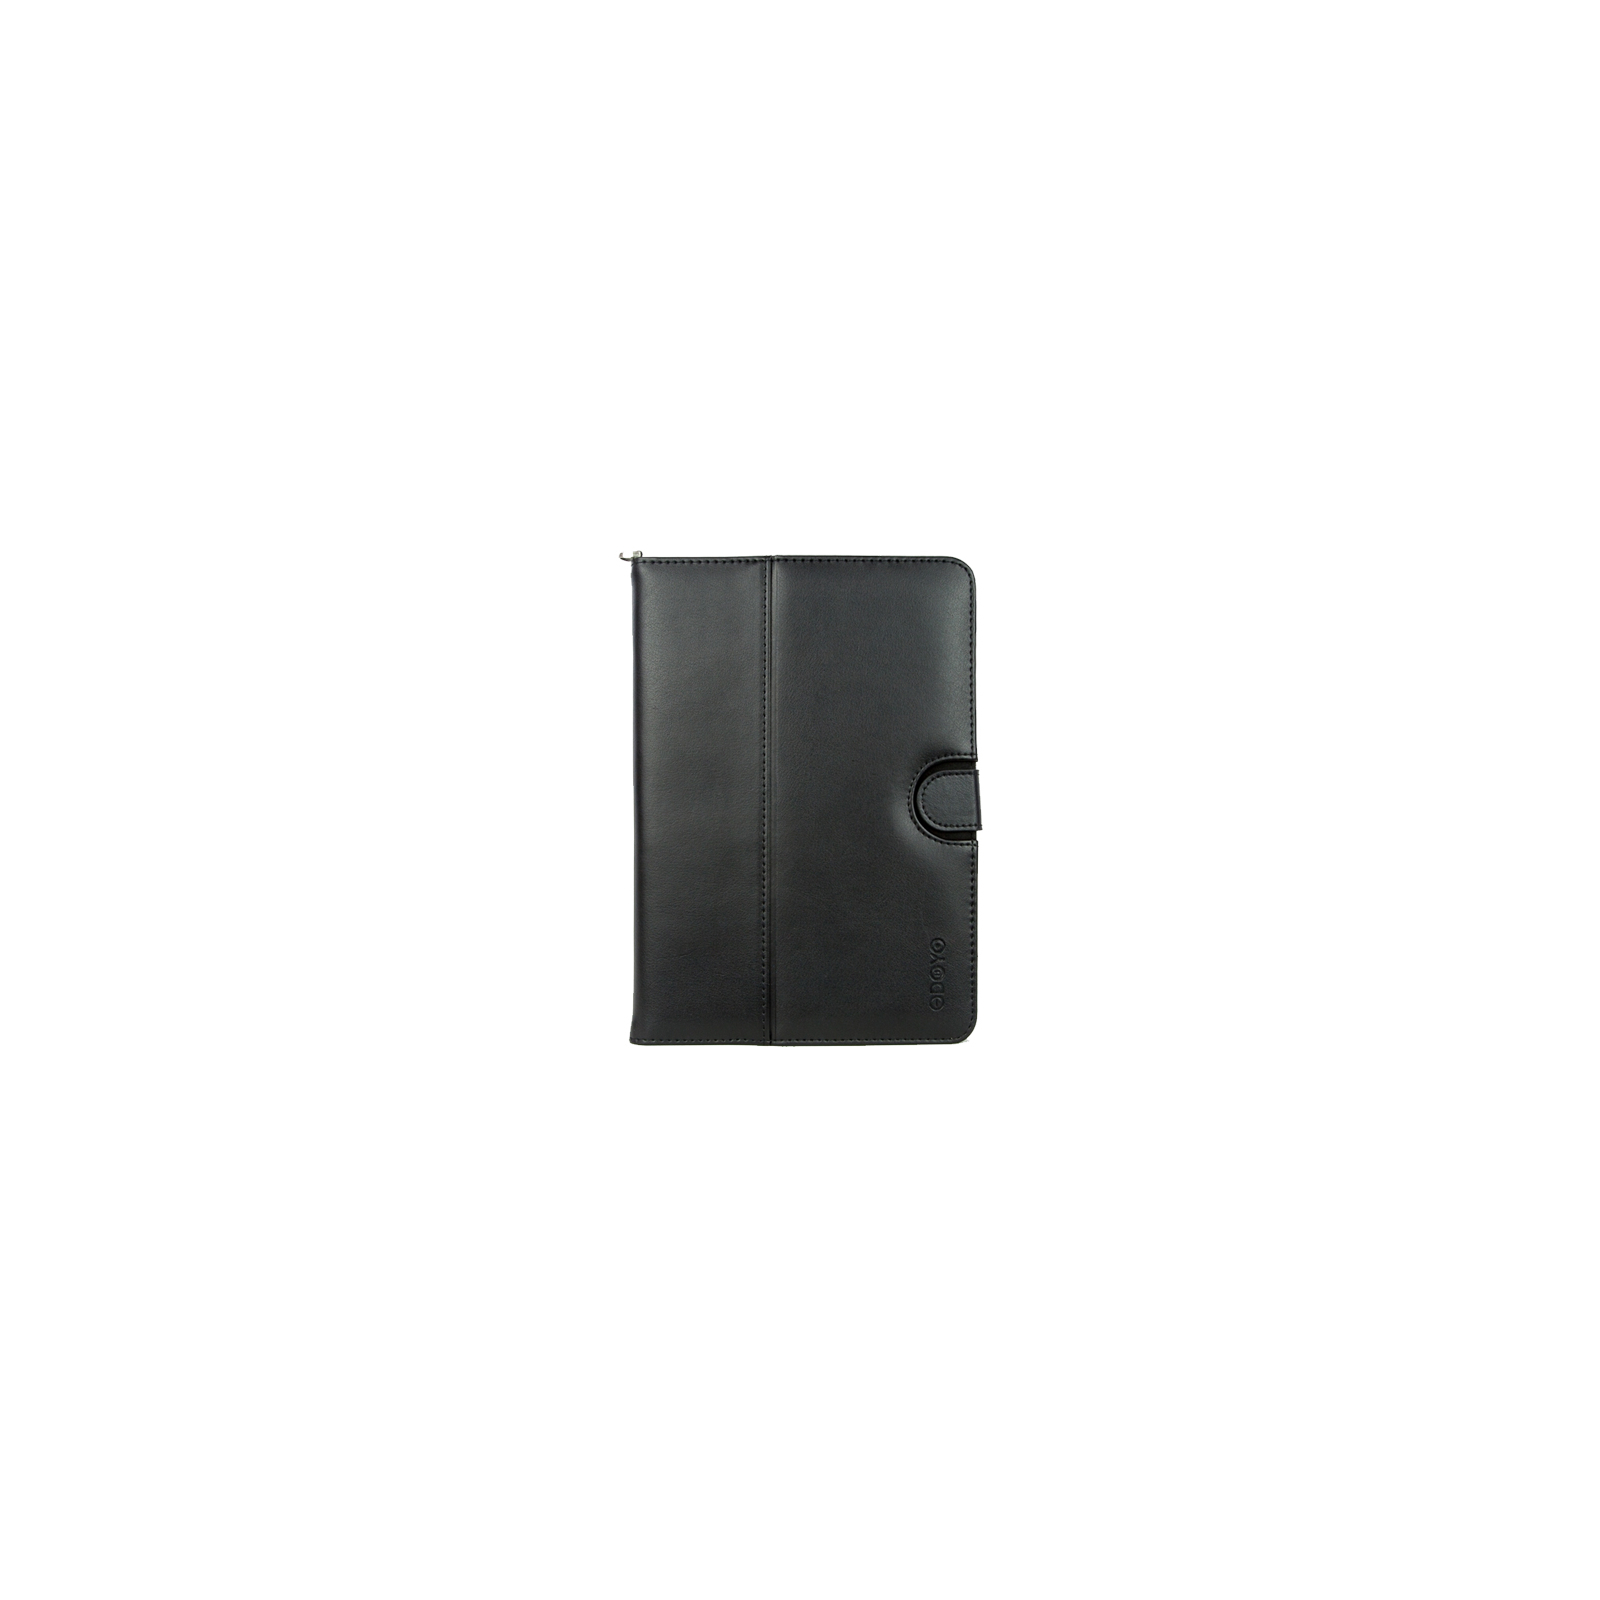 Чехол для планшета Odoyo IPAD AIR /GENUINE LEATHER FOLIO BLACK (PA536BK)